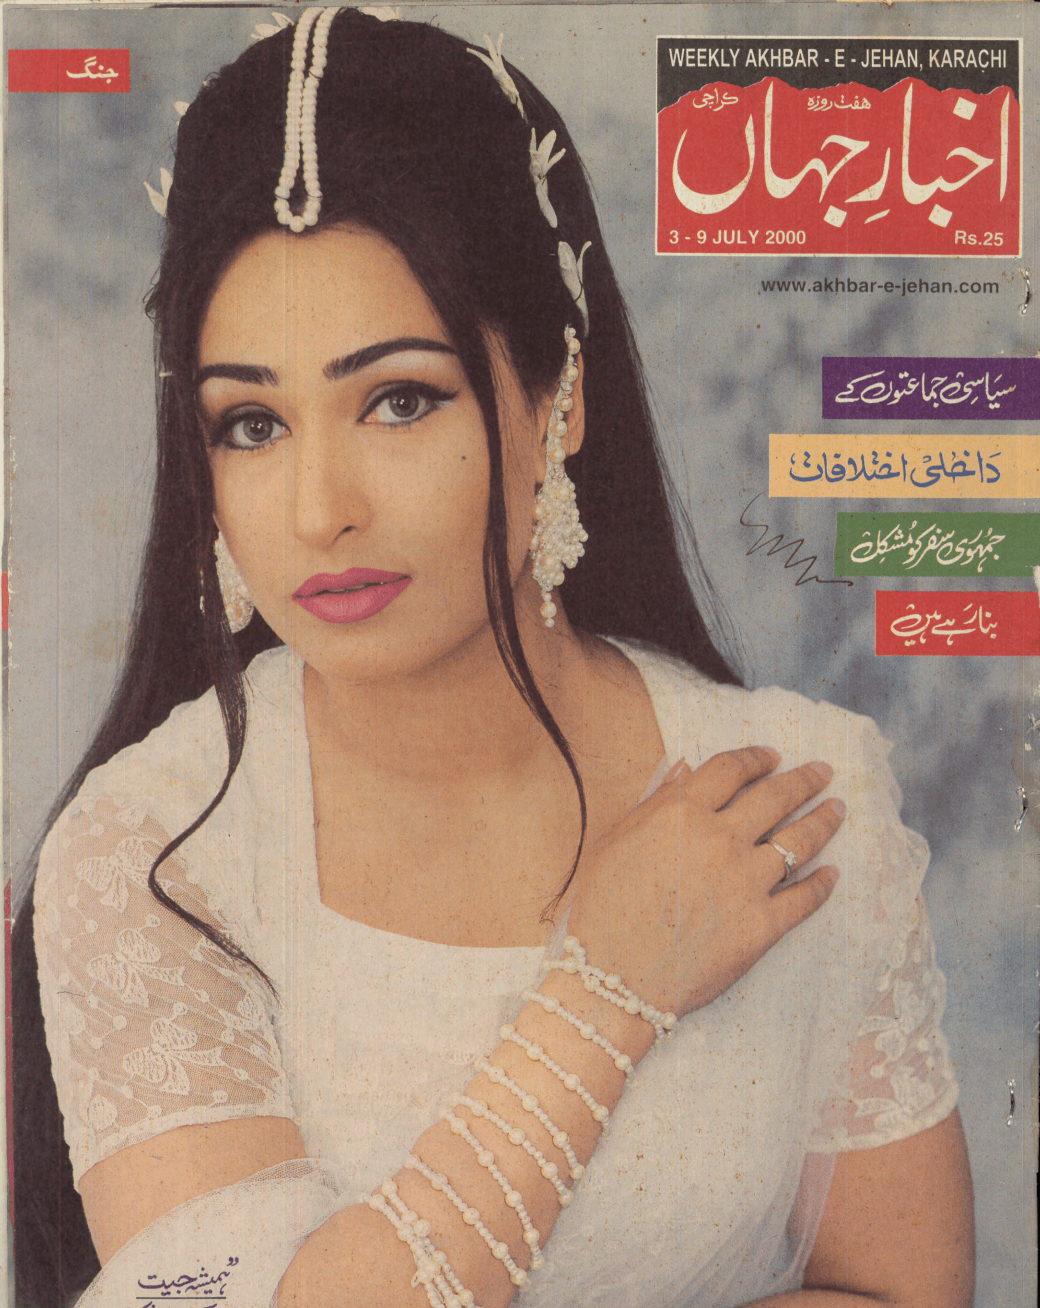 Akhbar-e-Jahan (Jul 3, 2000)